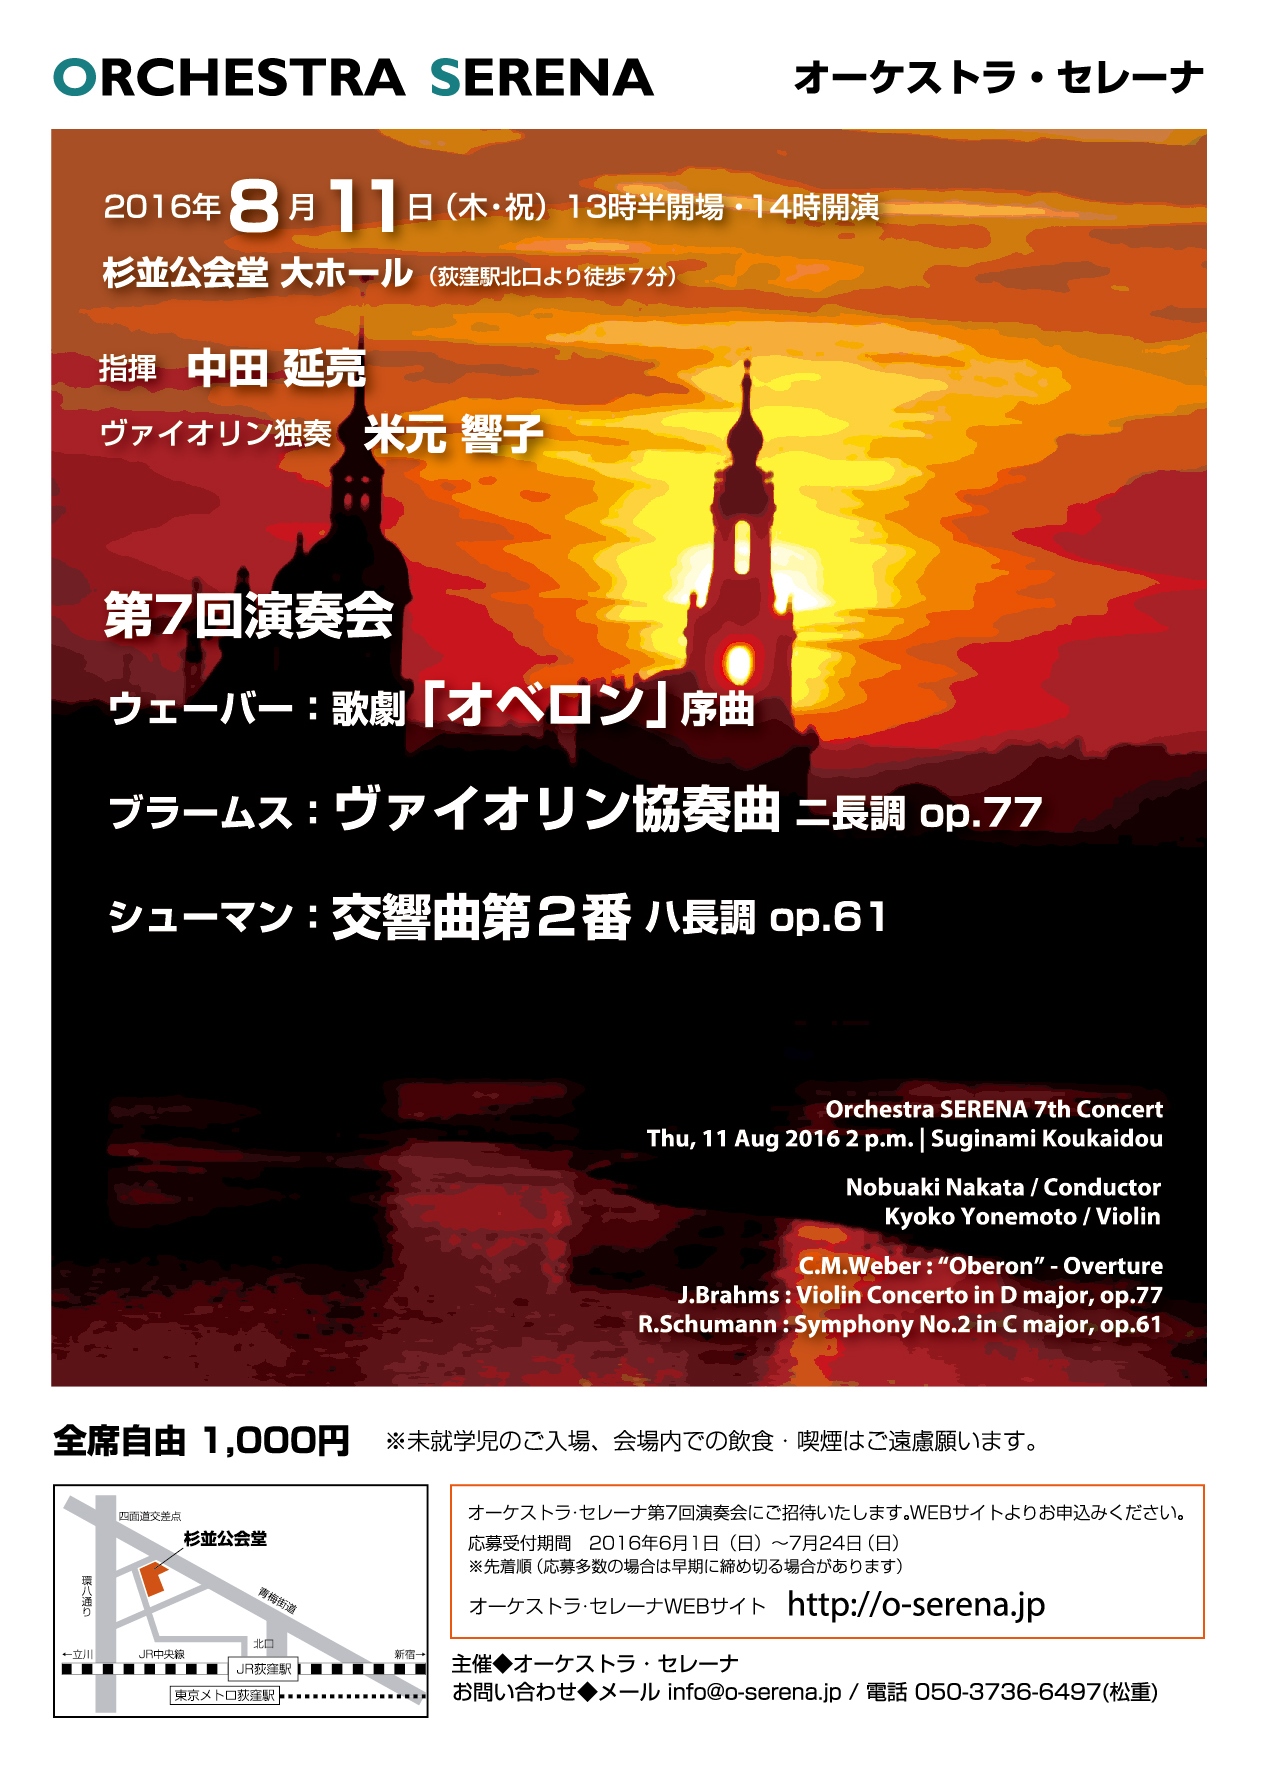 http://www.nobuakinakata.com/flyer.jpg